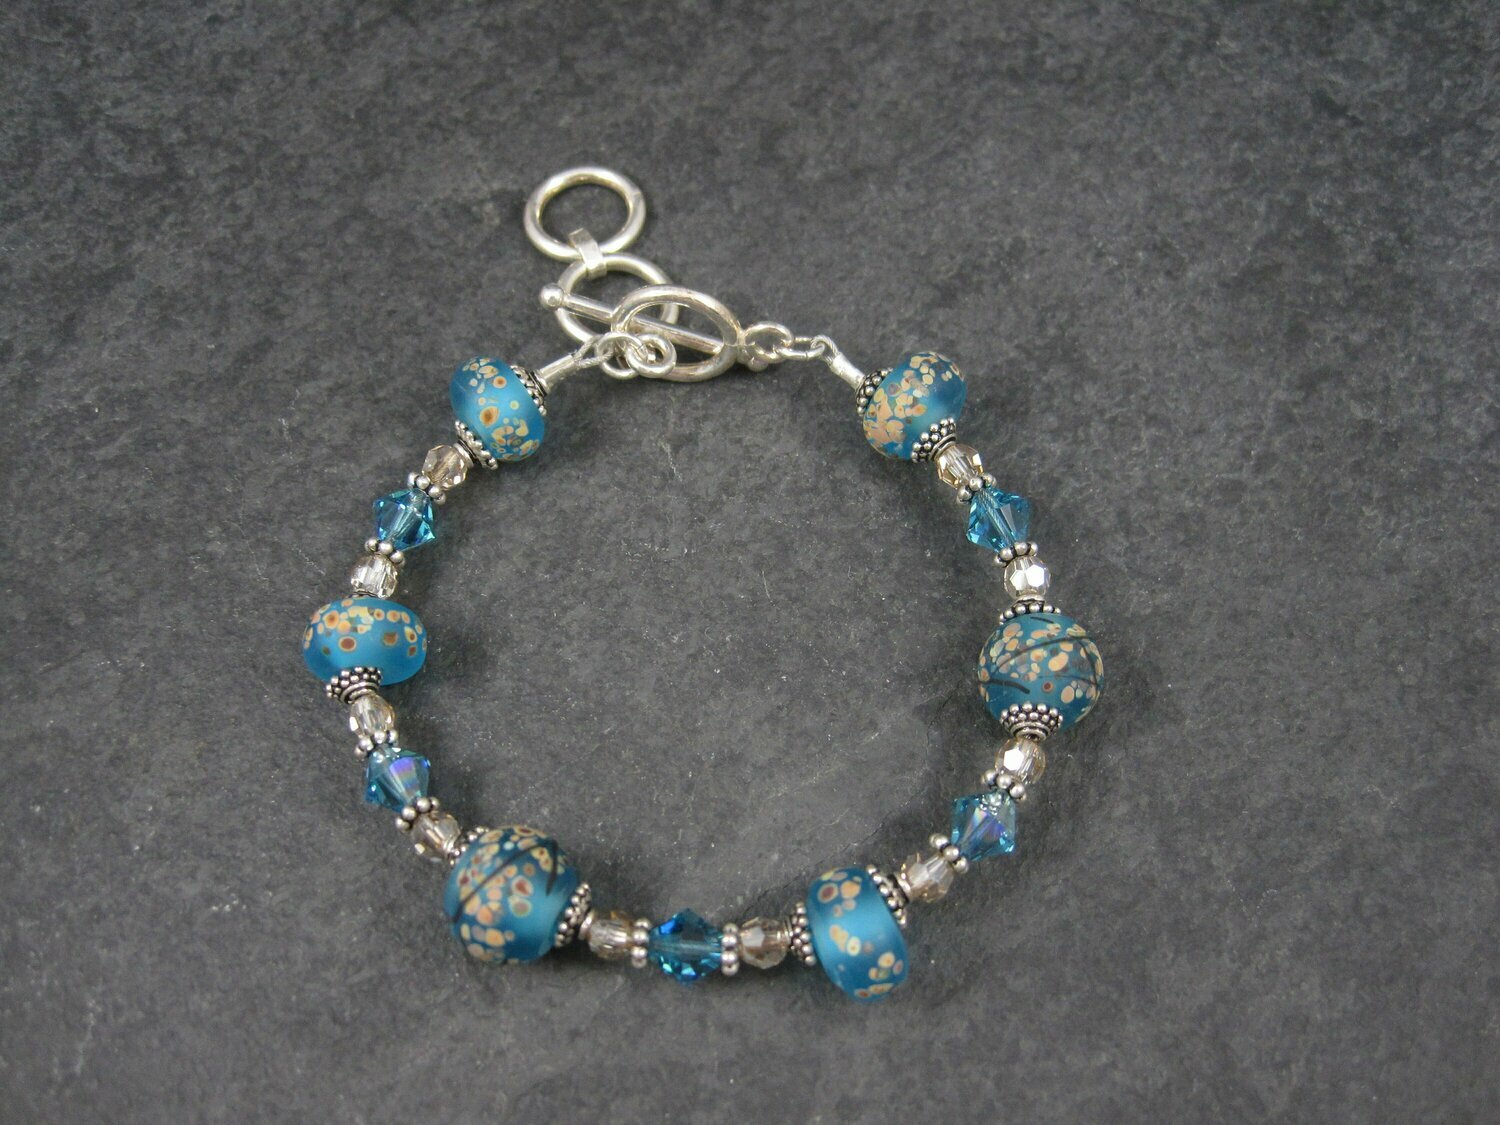 Handmade Blue Lampwork Art Glass Bead Bracelet 7-8 Inches